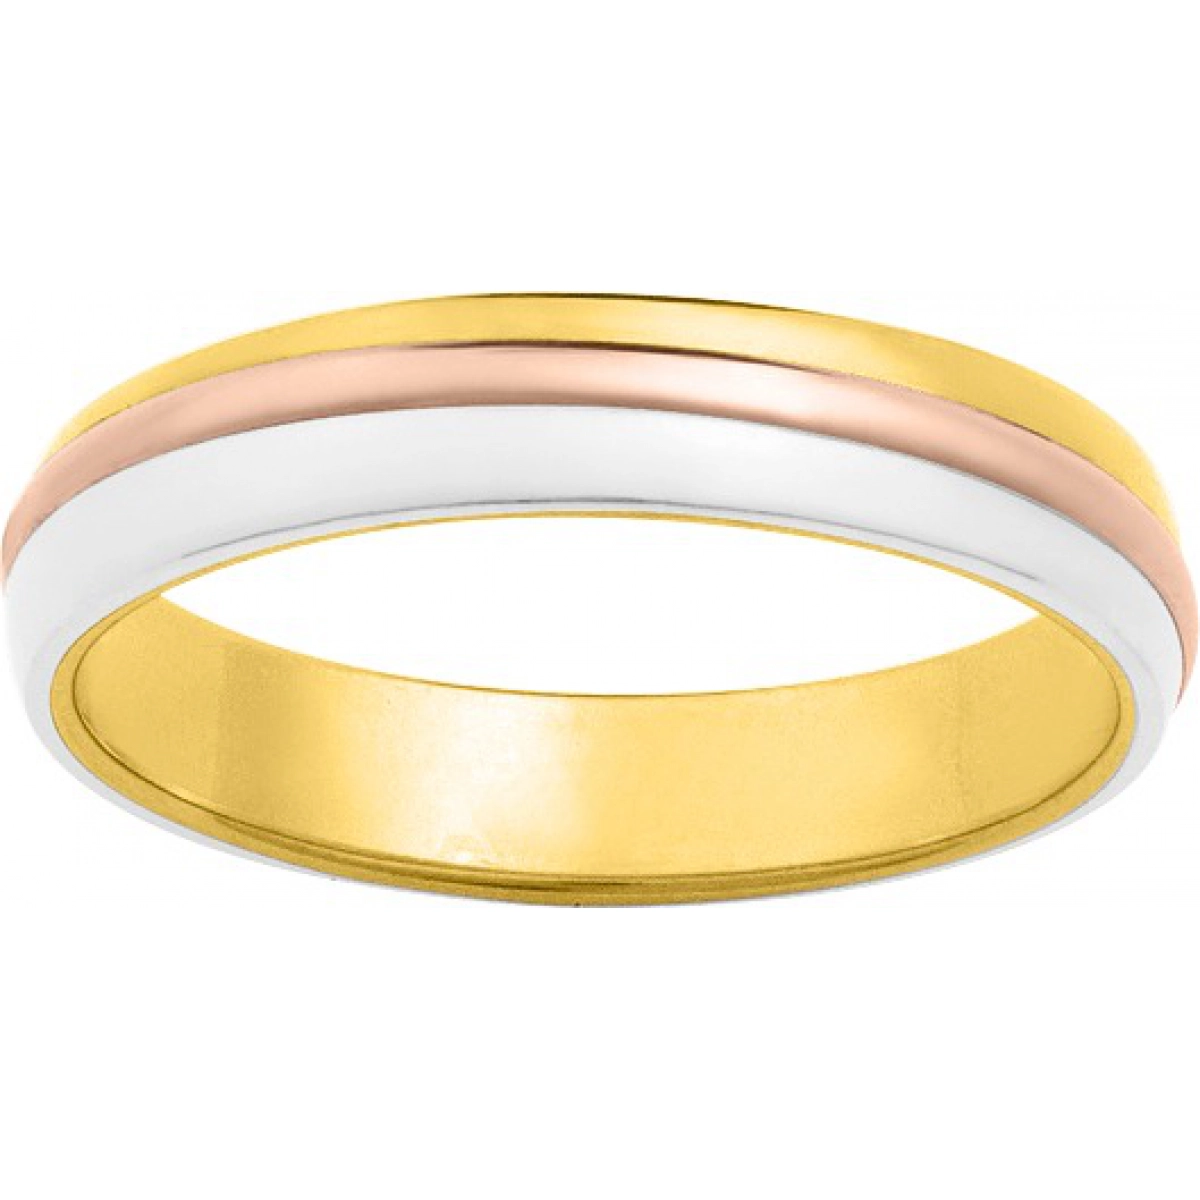 Wedding ring 9K 3TG - Size: 58  Lua Blanca  9480445.18